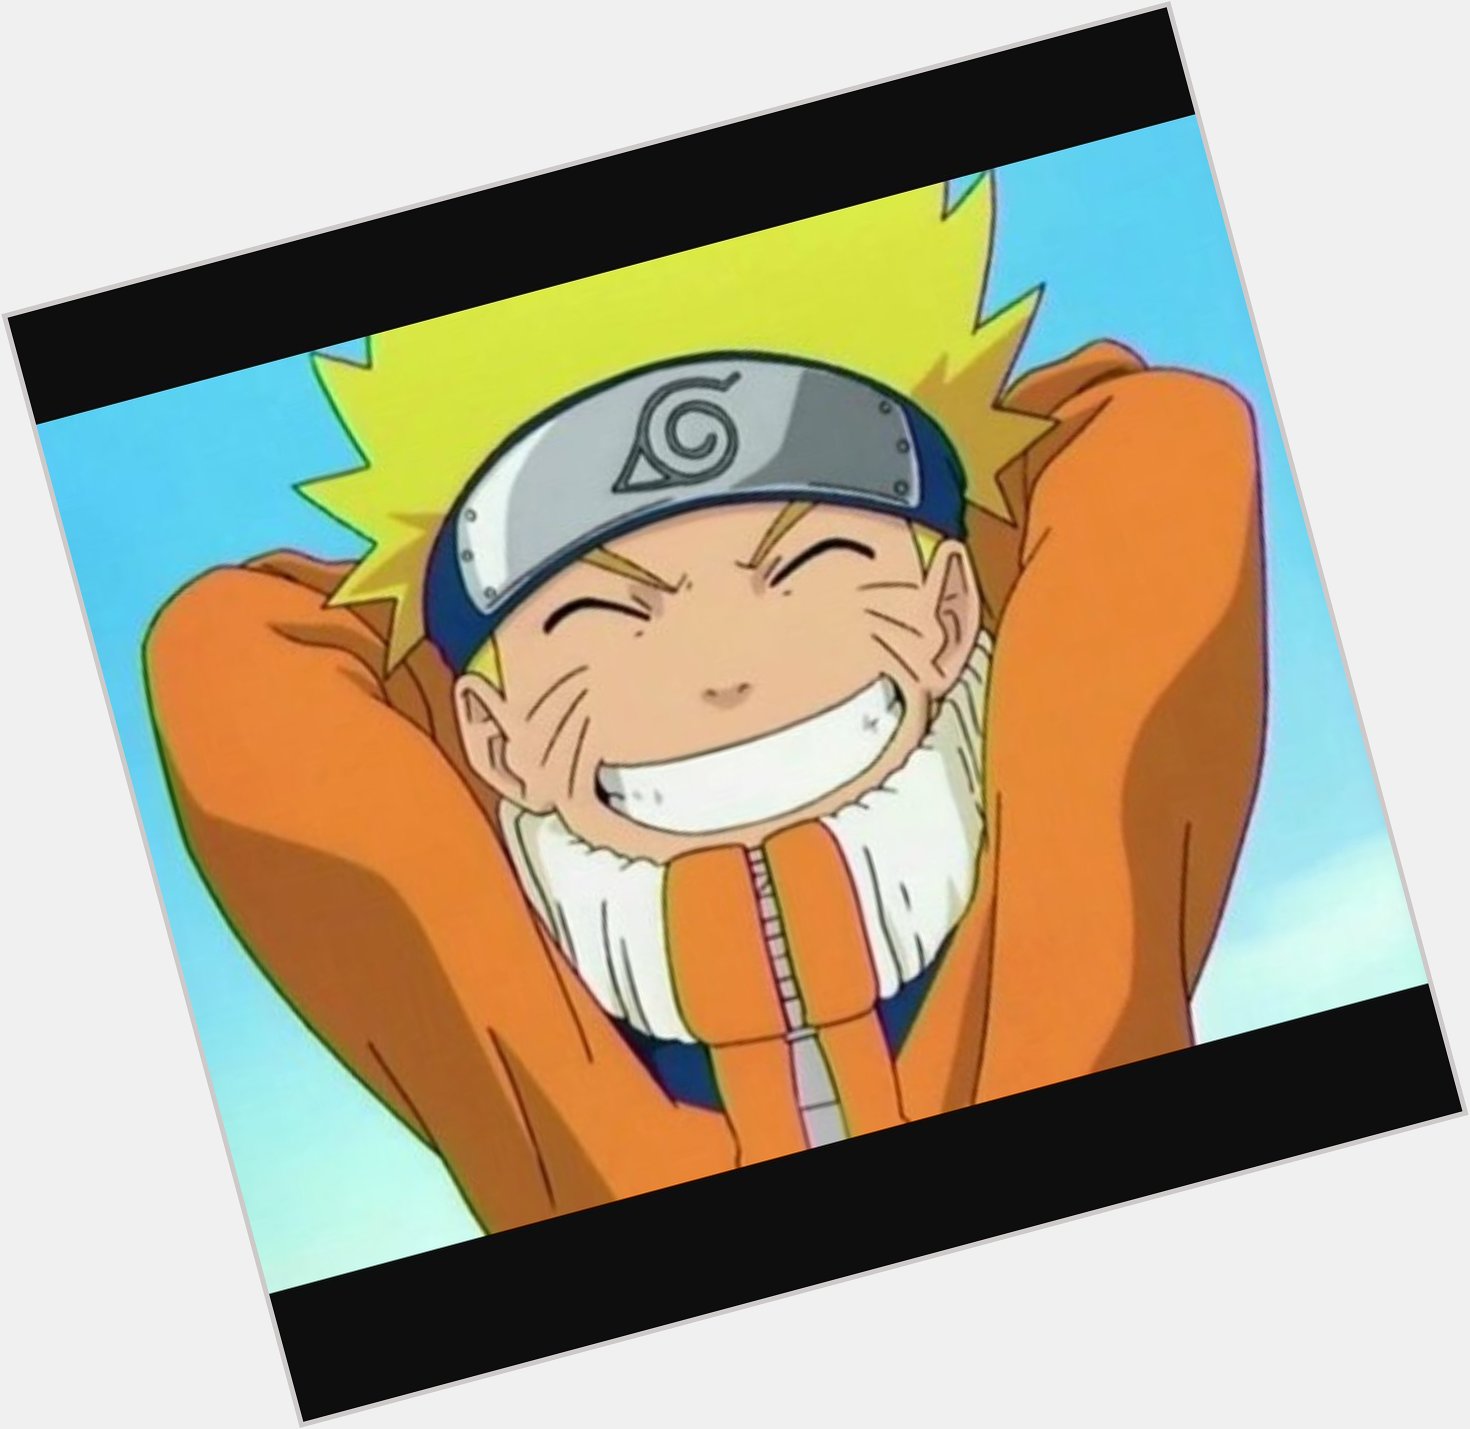 Also happy birthday to Naruto Uzumaki. 